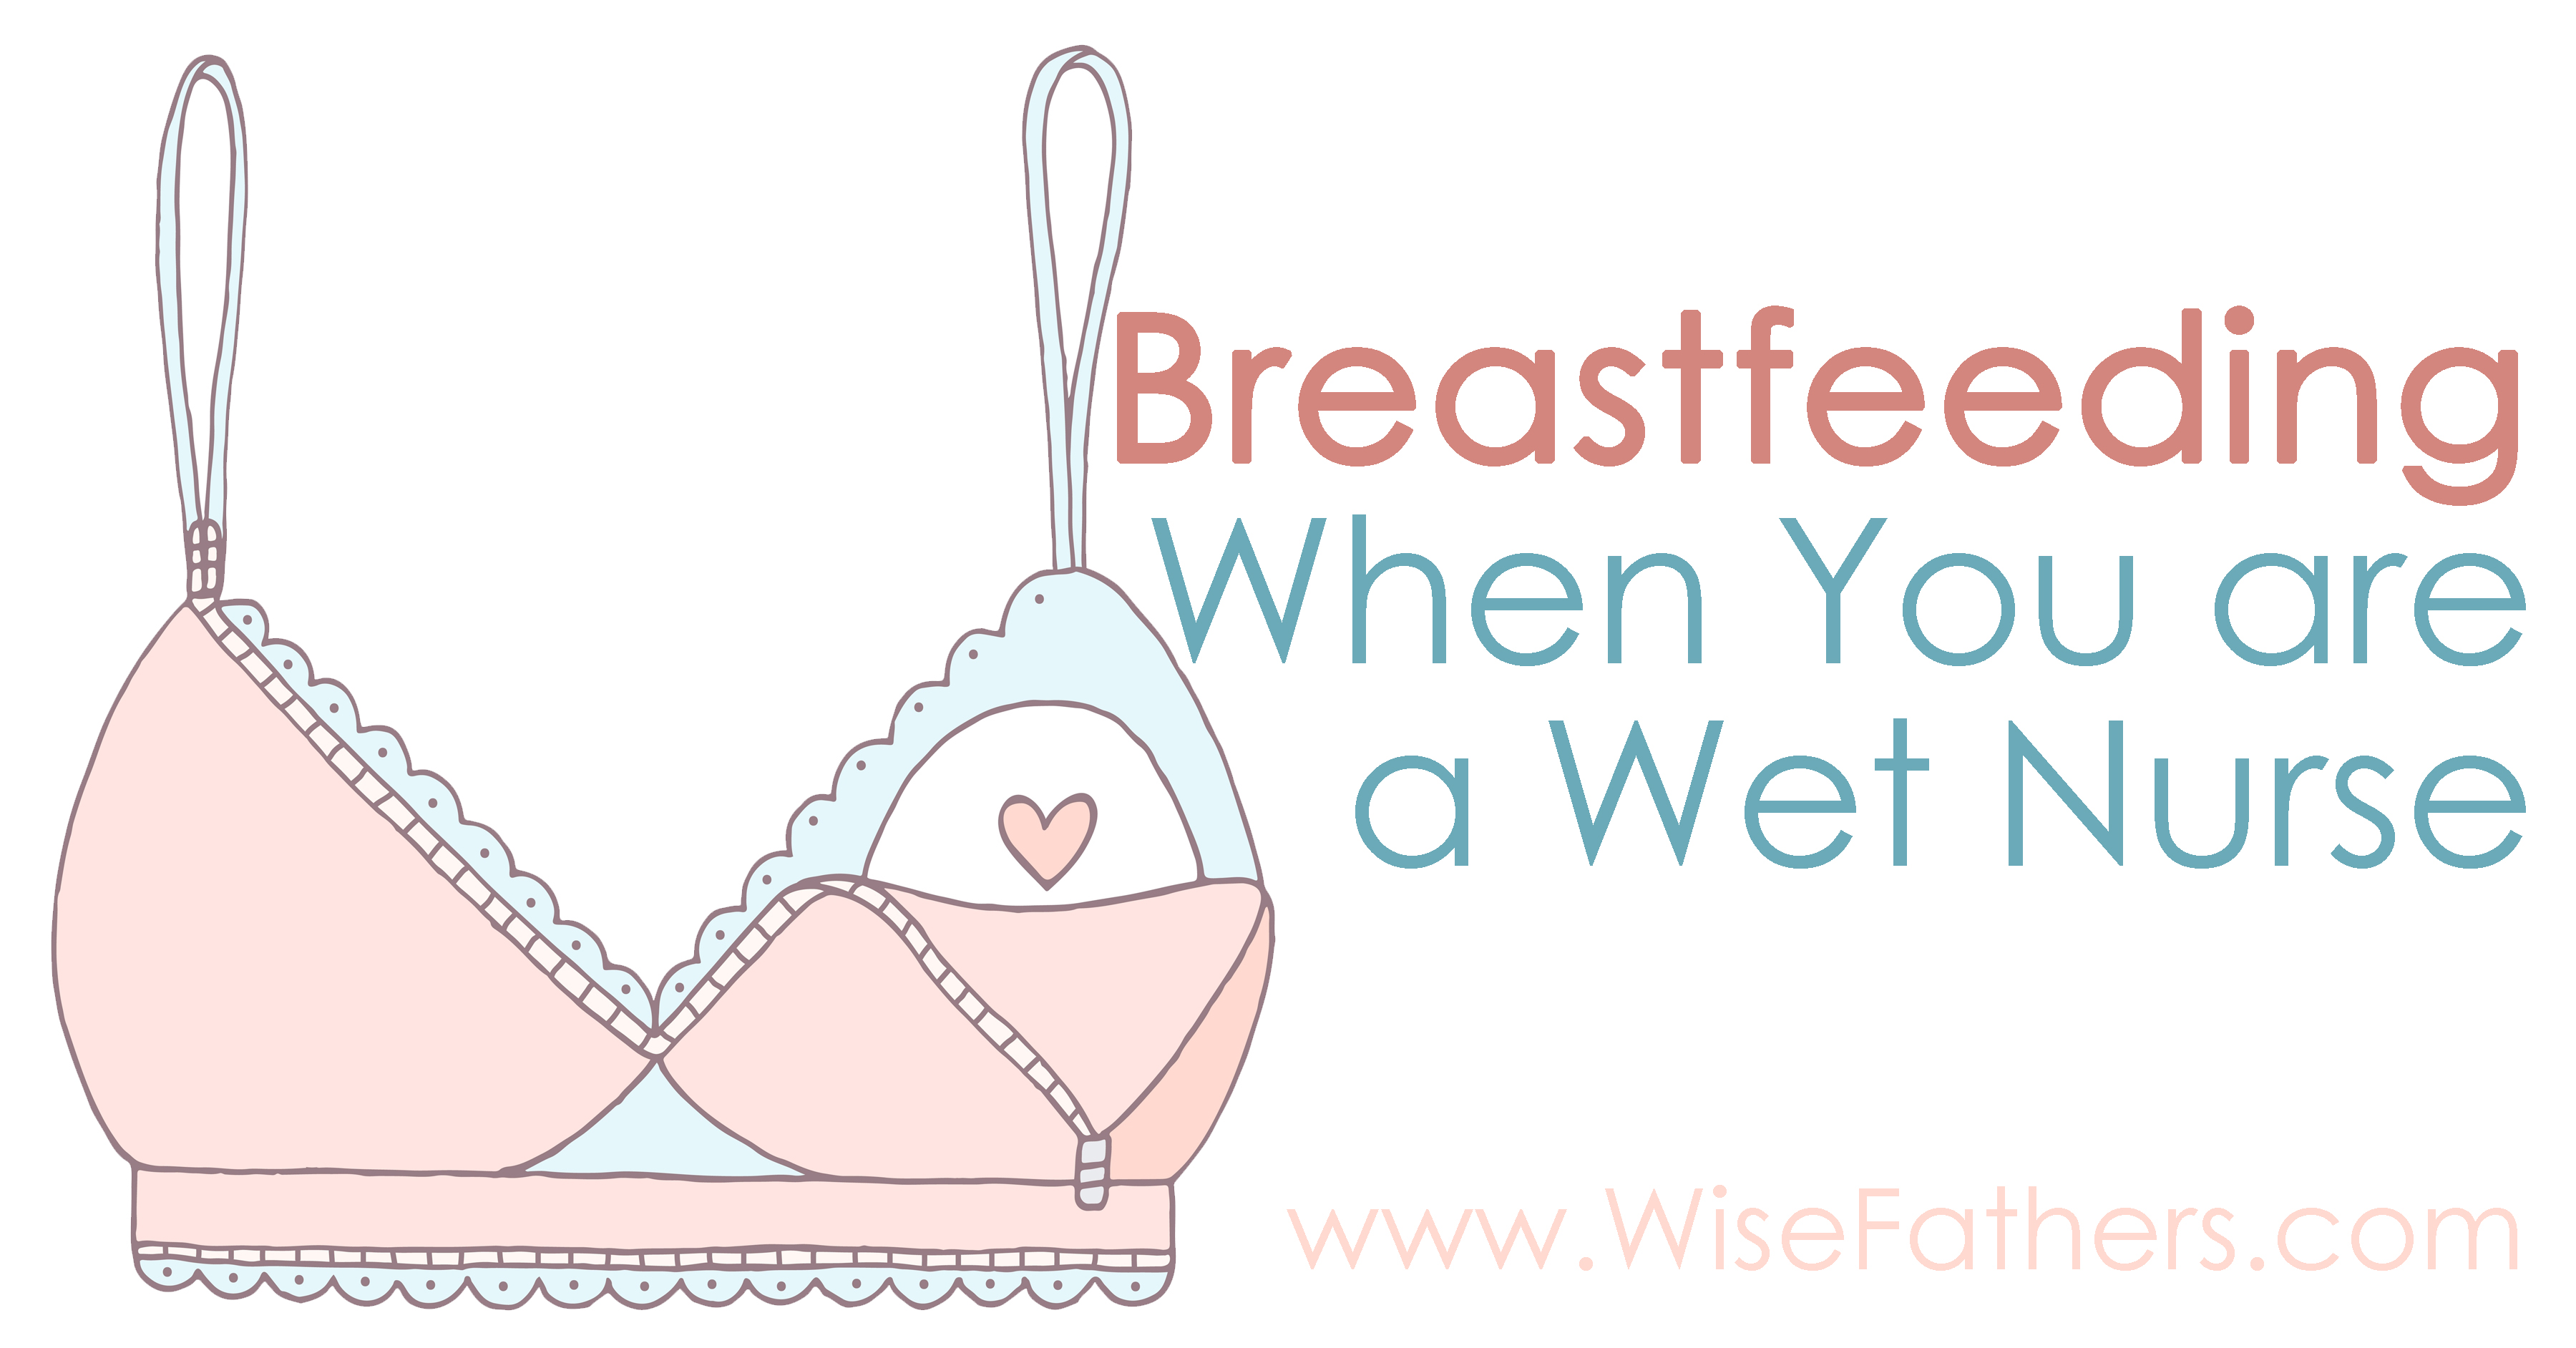 Breastfeeding When You are a Wet Nurse